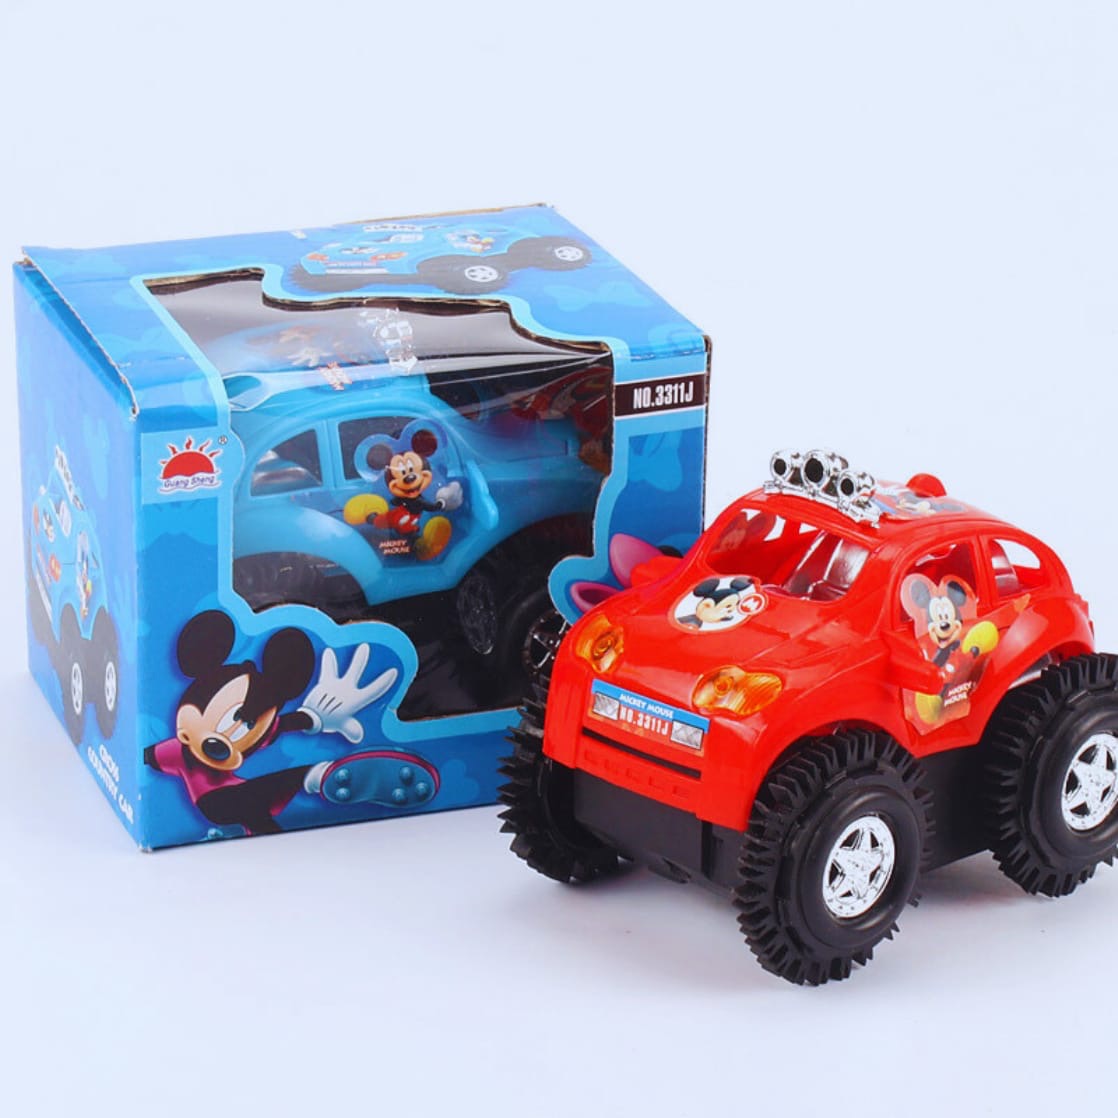 Mickey Mouse mini car